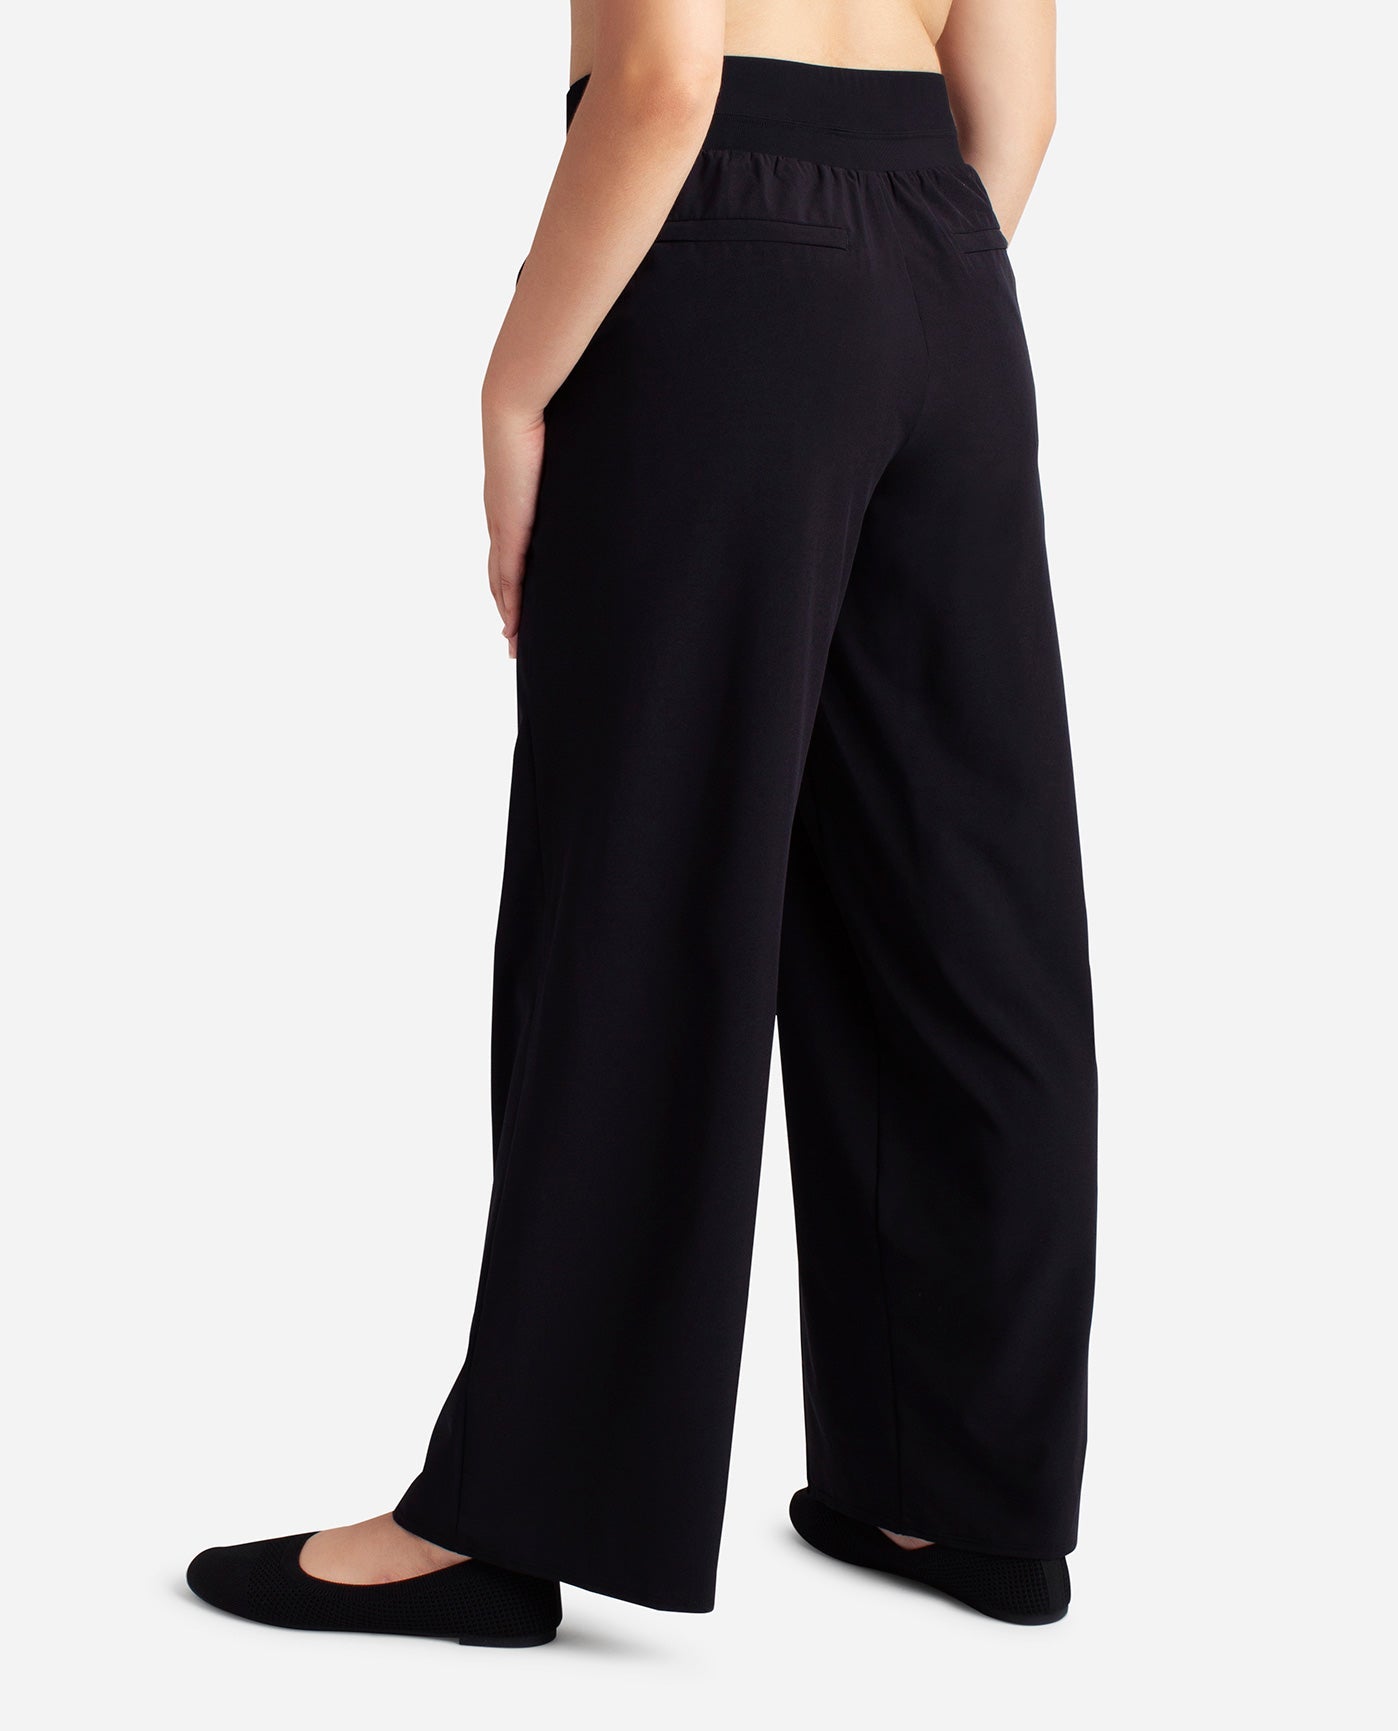 Danskin Now Solid Black Active Pants Size M - 36% off